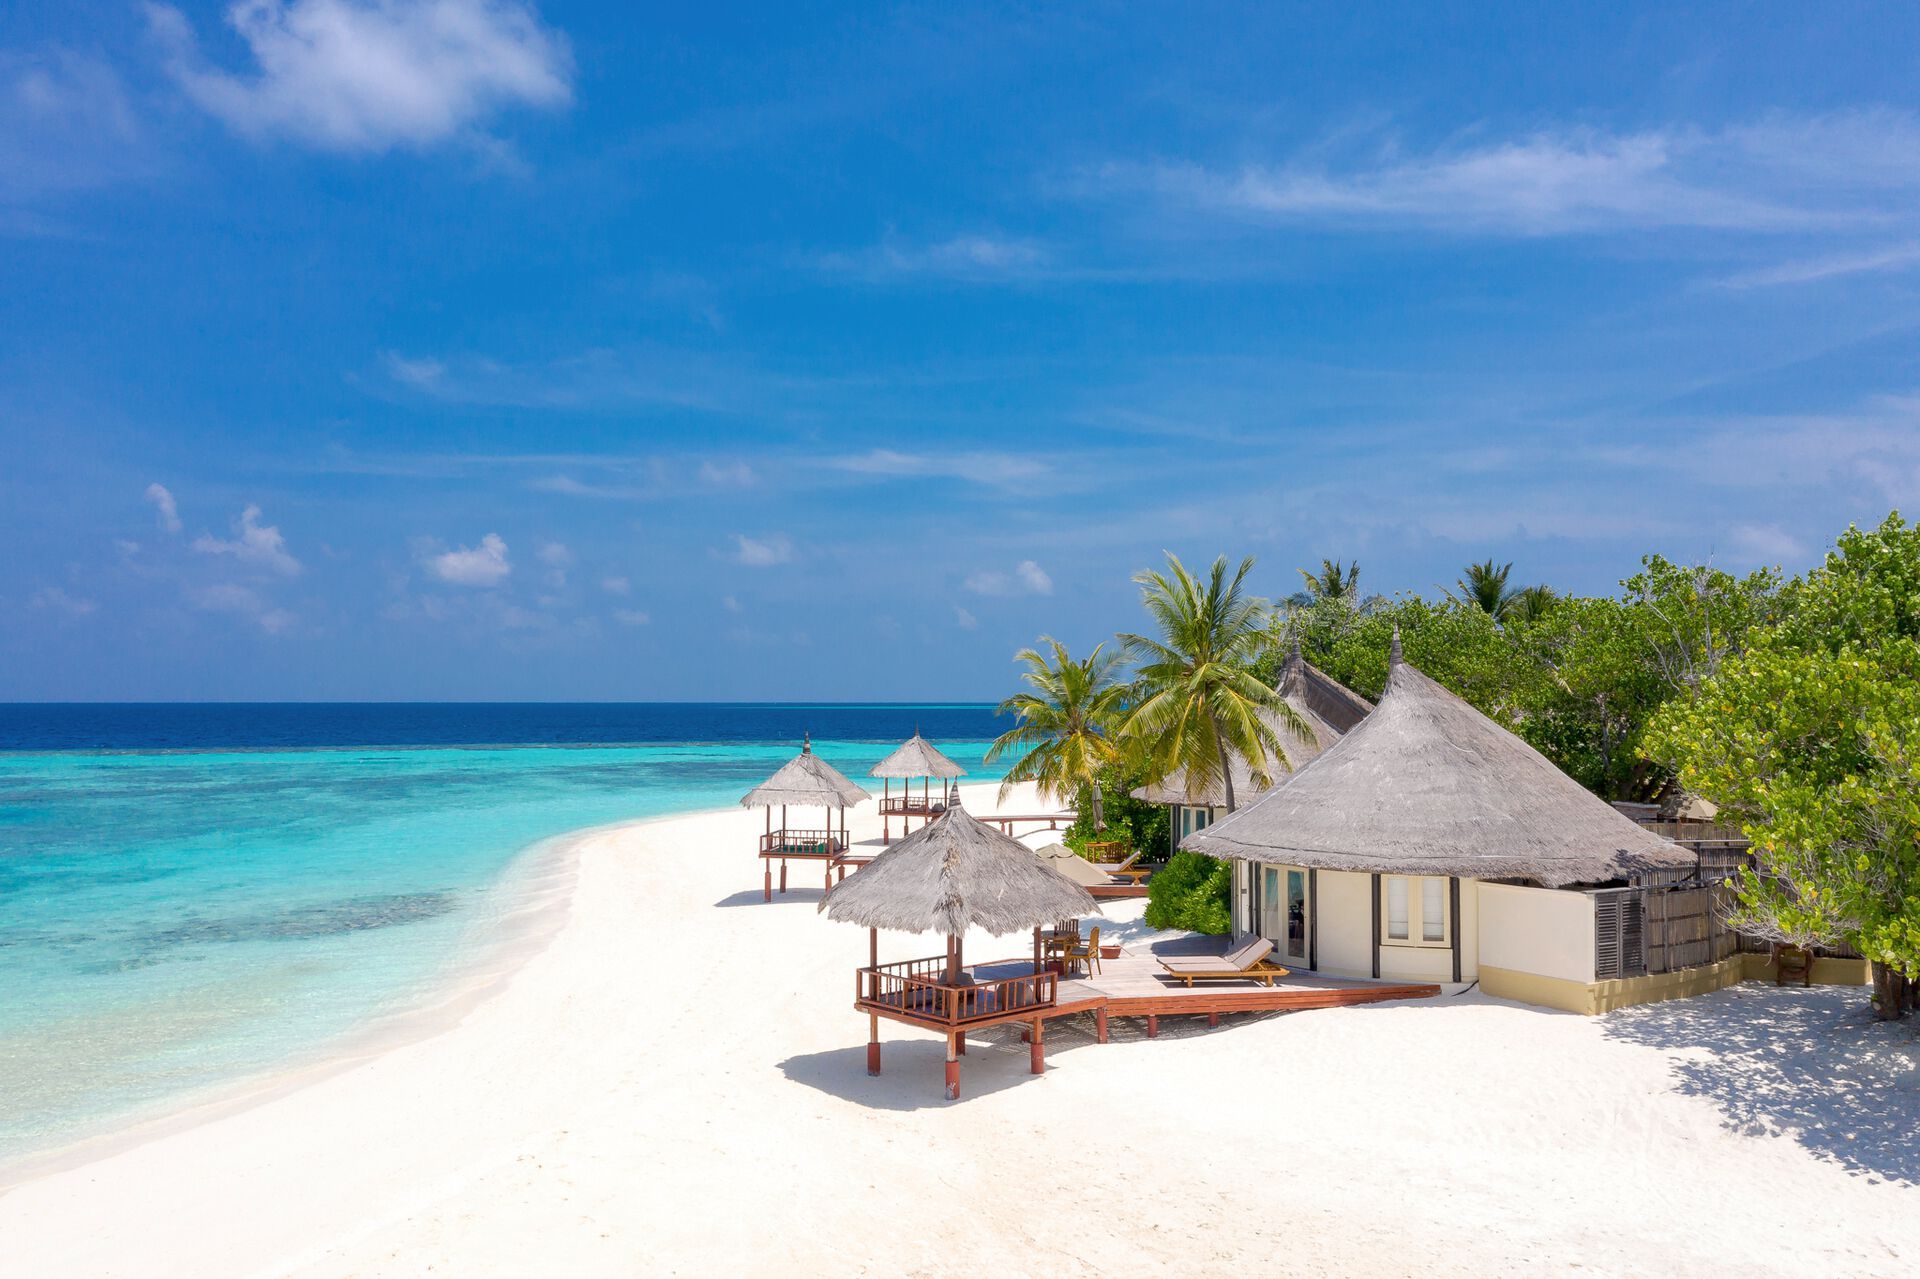 Maldives - Hotel Banyan Tree Vabbinfaru 5* - transfert inclus